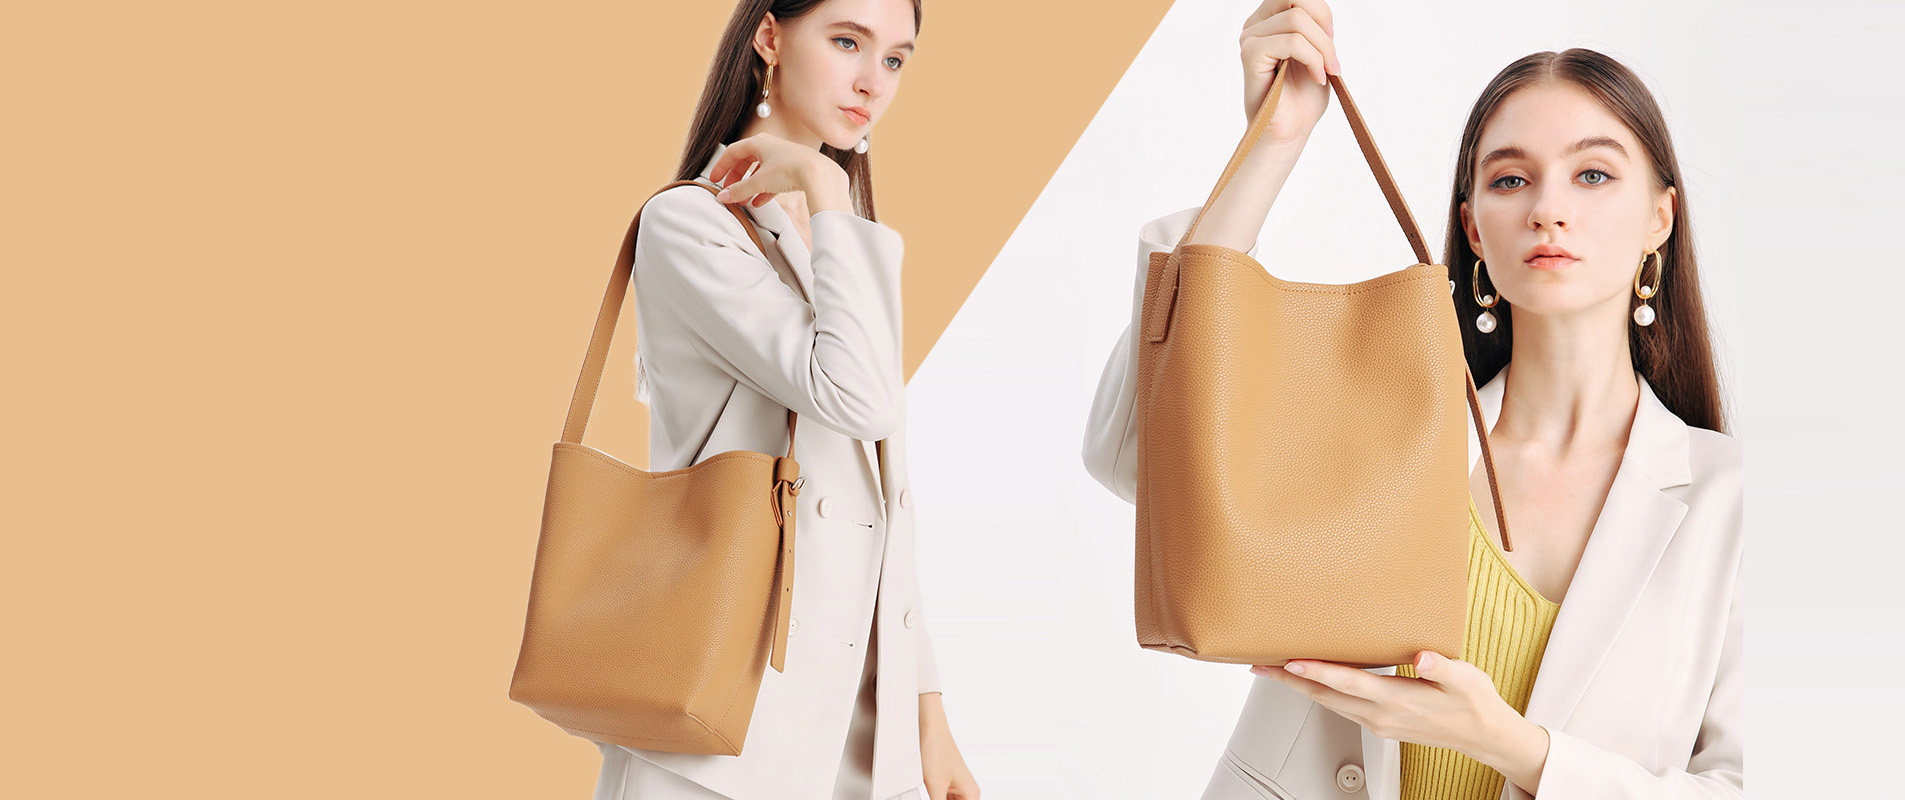 Lavie Handbags - Buy Lavie Handbags Online in India | Myntra